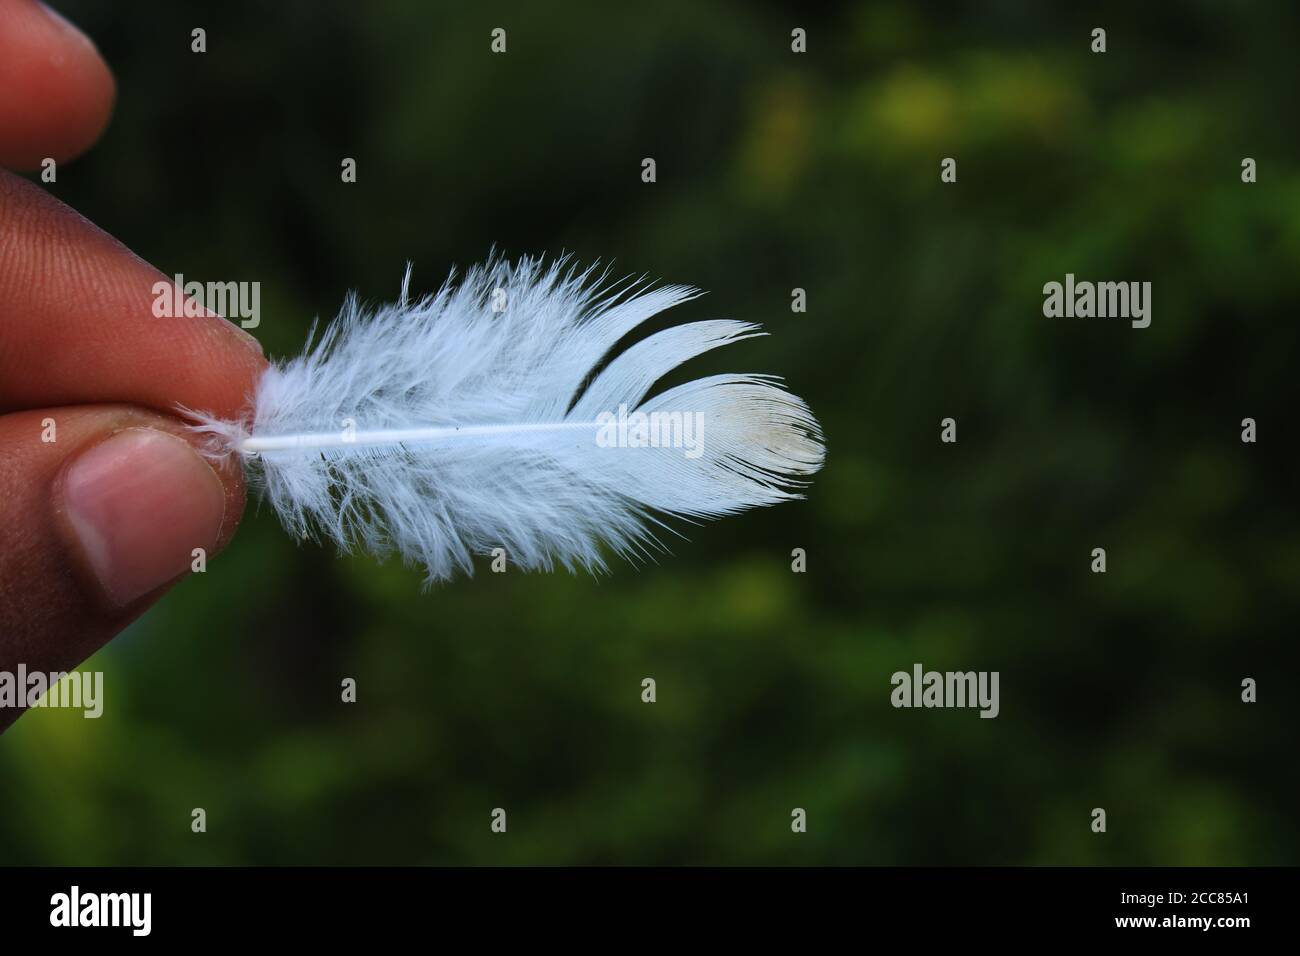 Pigeon bird fur with natural background photo capture Stock Photo - Alamy